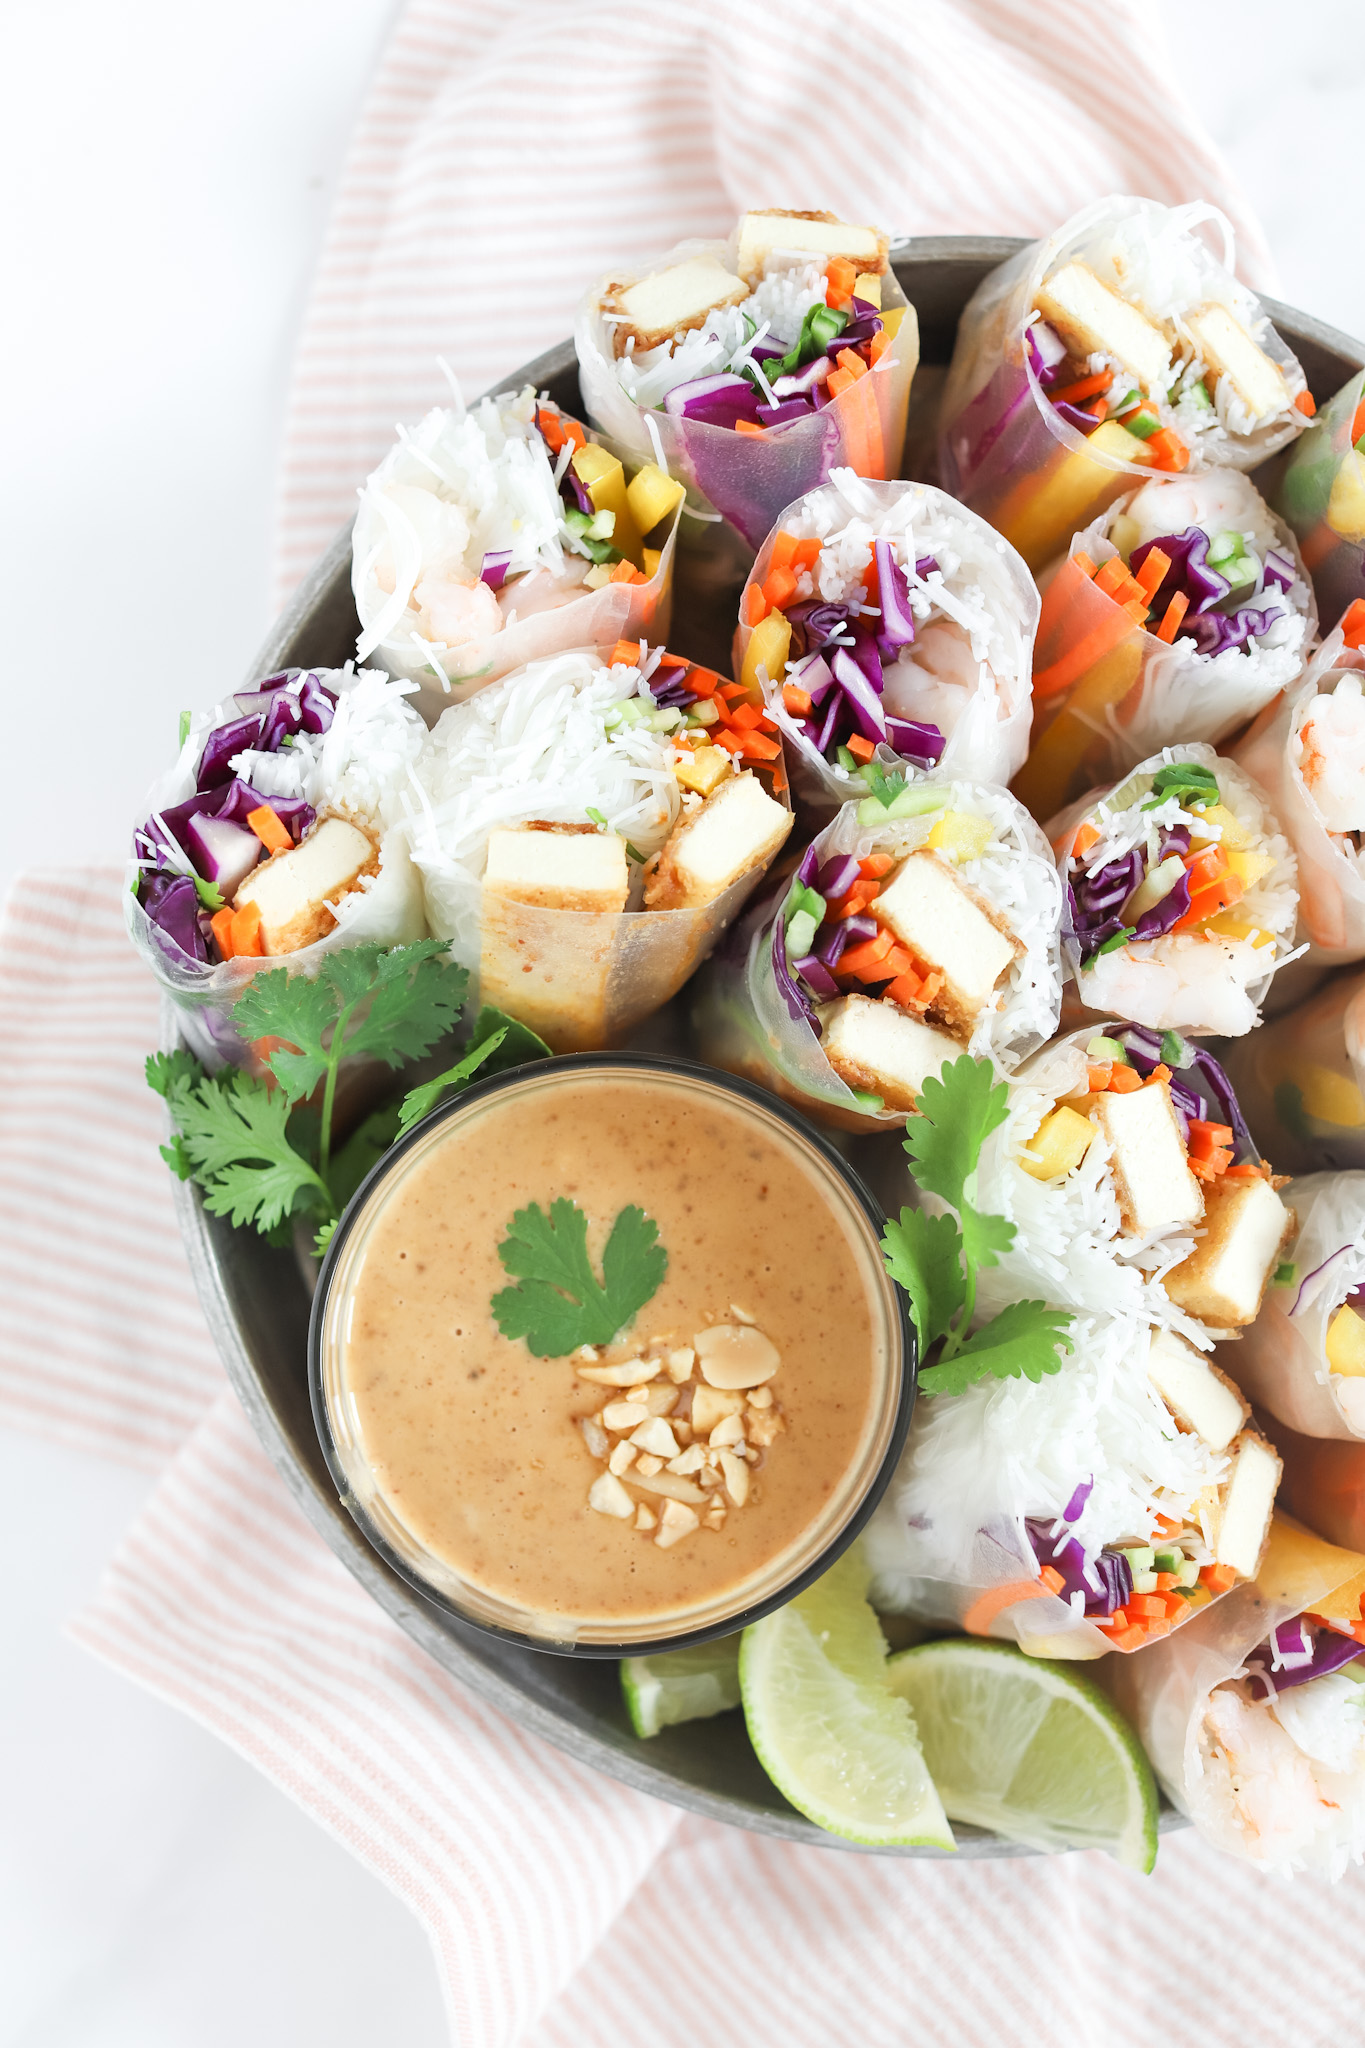 Summer Salad Rolls with Peanut Sauce by Fraiche Living